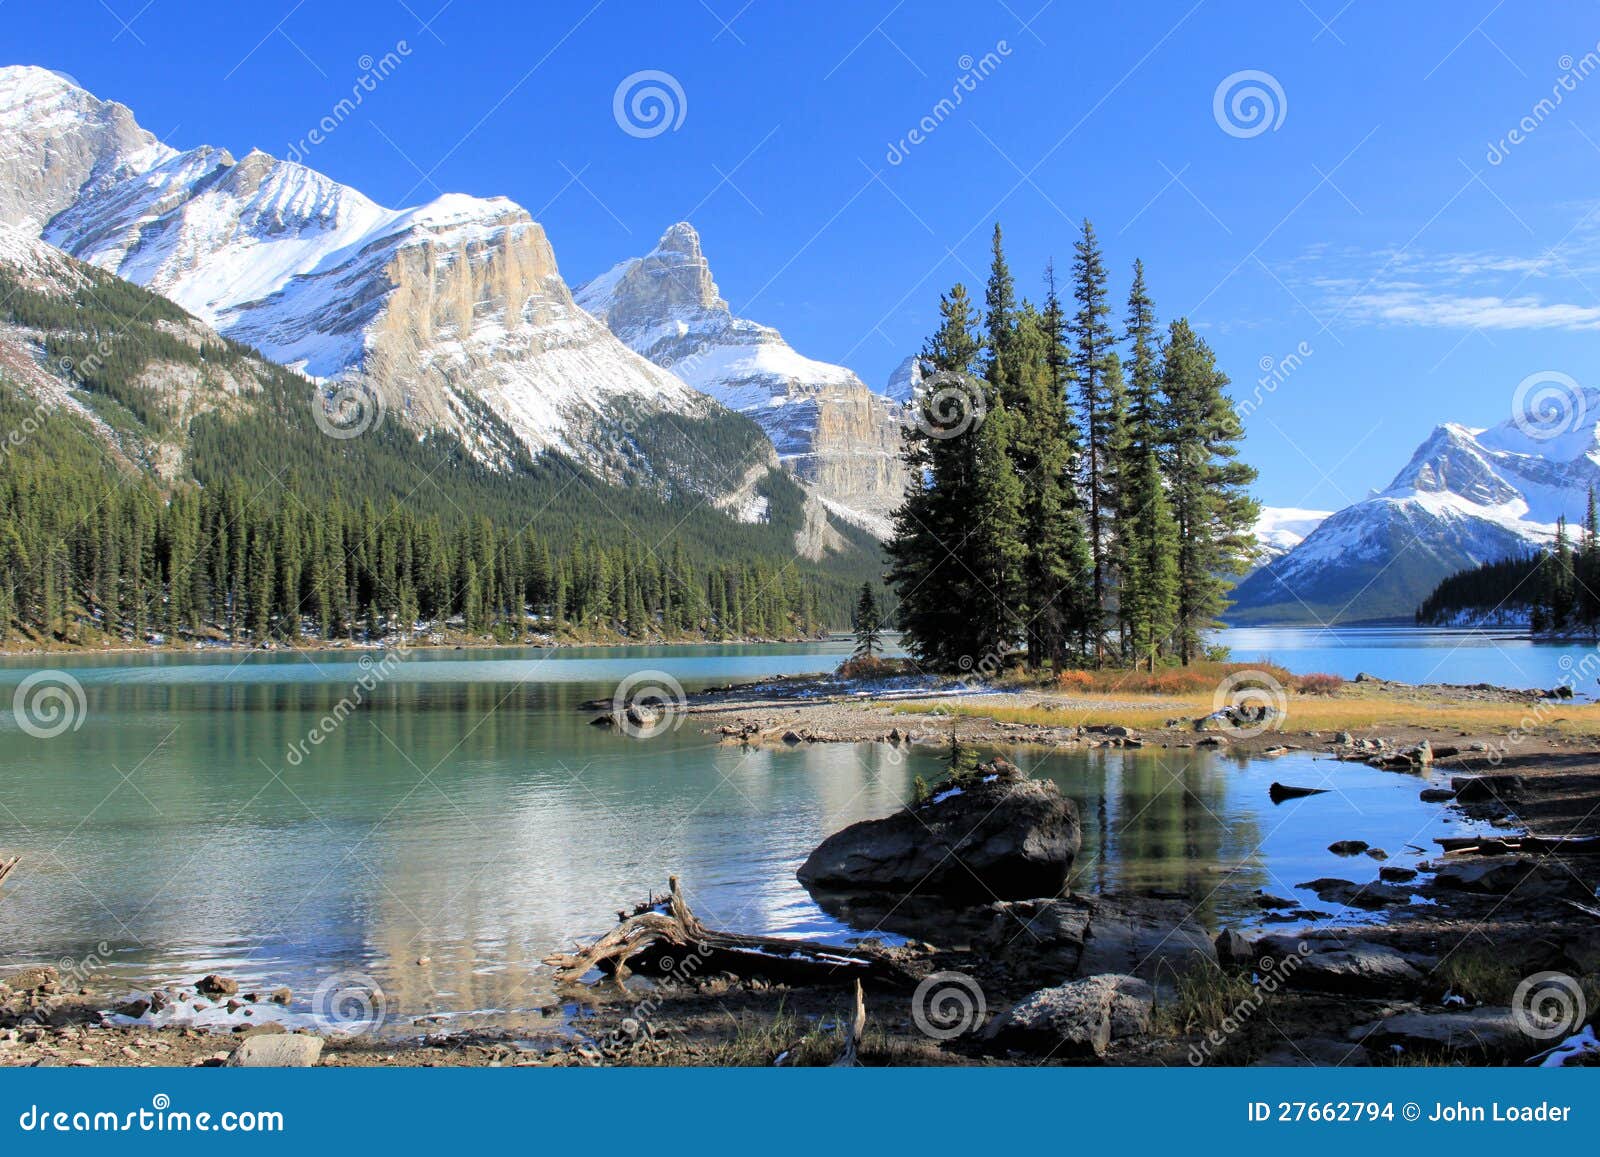 rocky mountains - canada